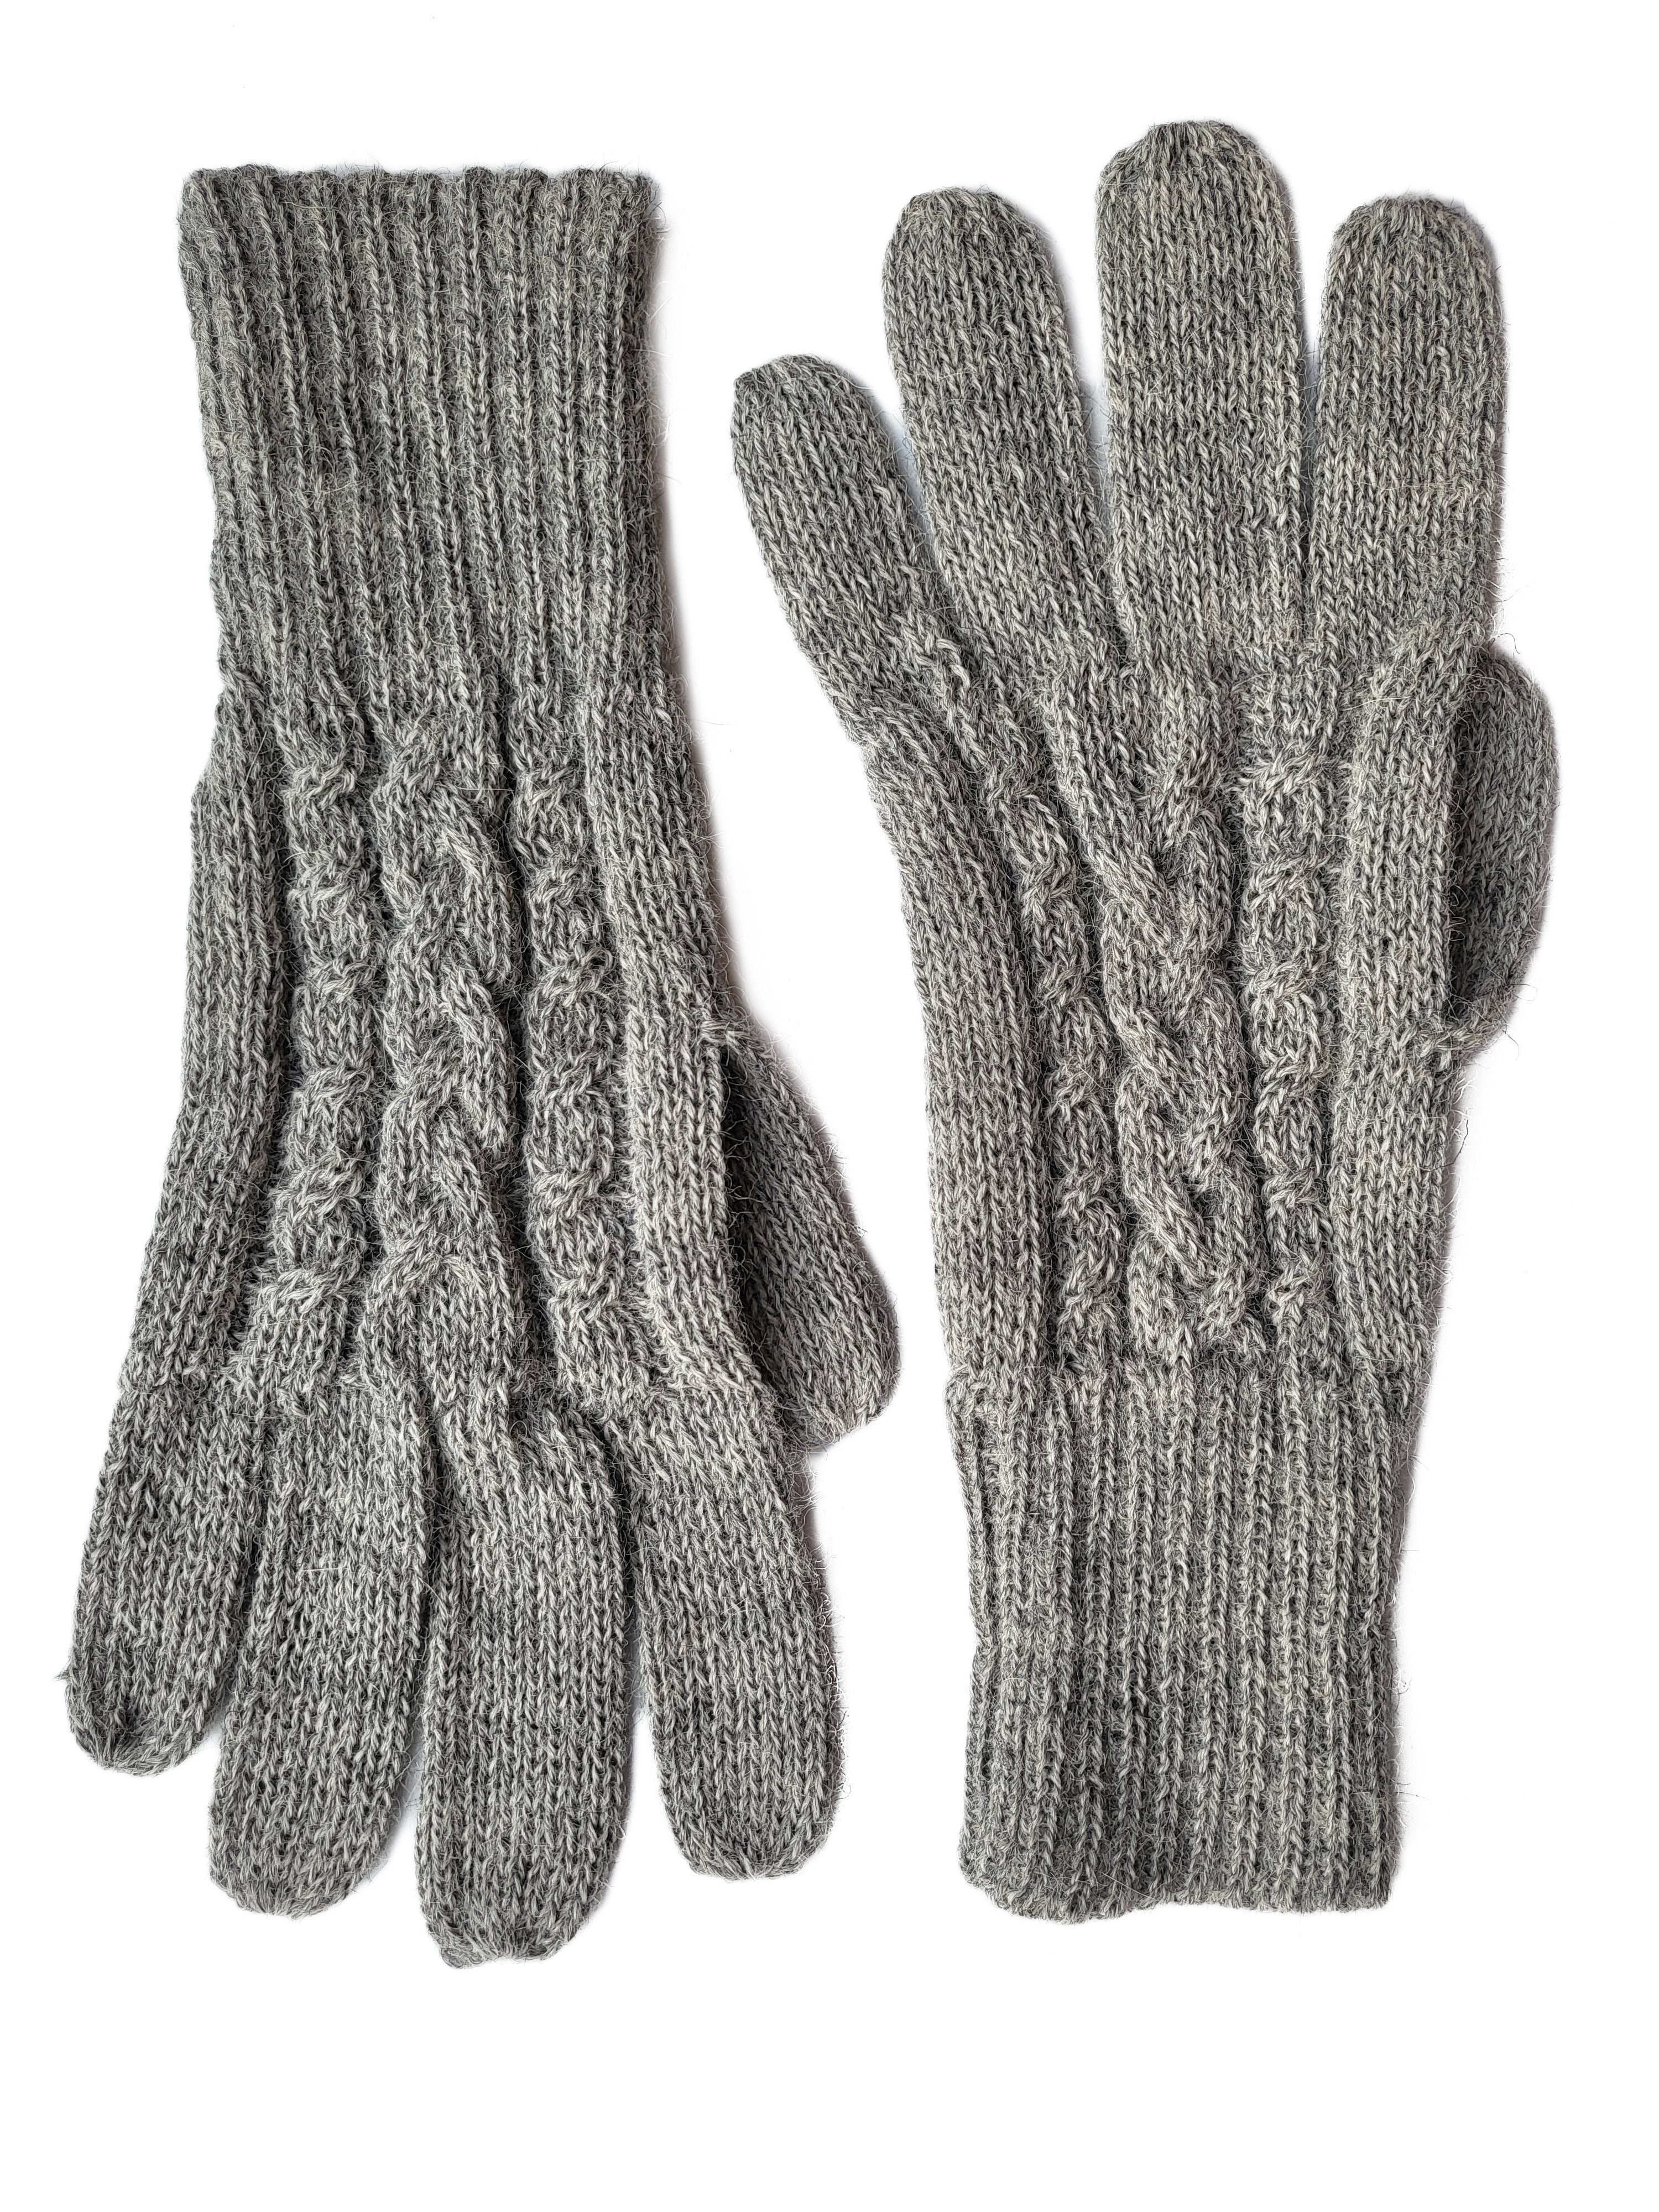 Posh Gear Strickhandschuhe aus Alpaka Alpakawolle 100% Guantibrada Fingerhandschuhe grau hell